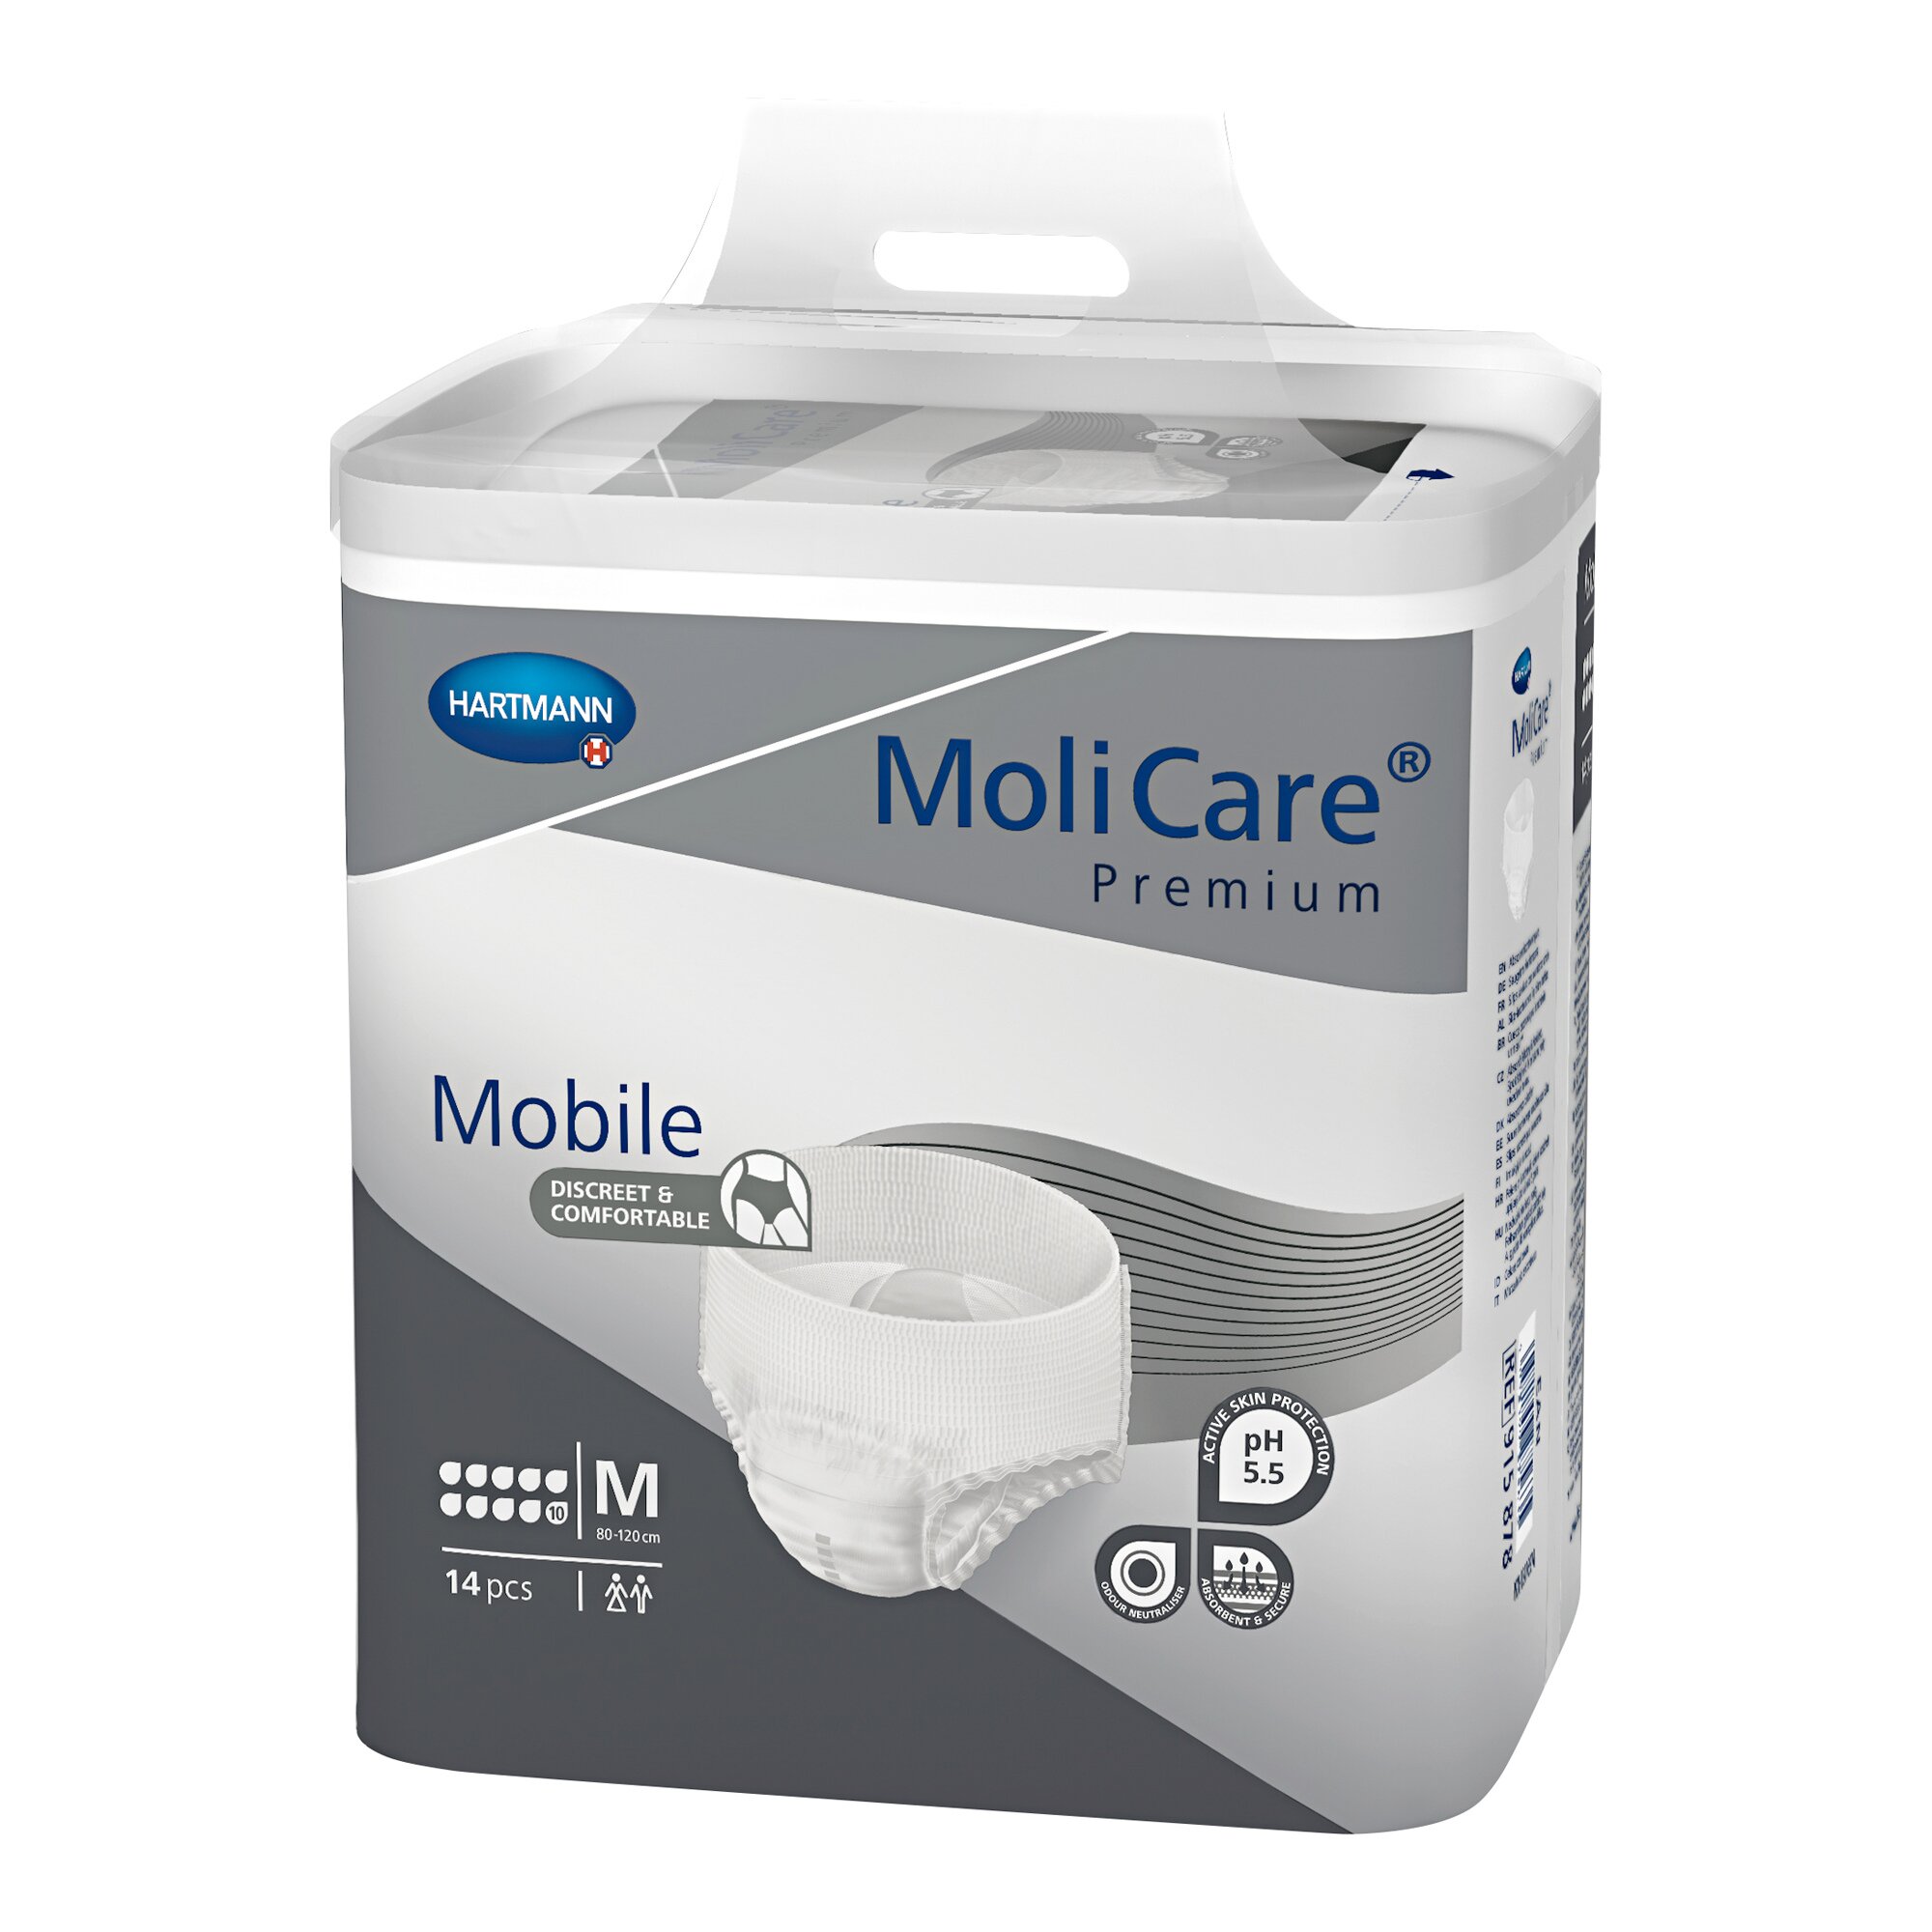 MoliCare Premium Mobile, Saugleistung 2600 ml, 14 Stück, Größe: M